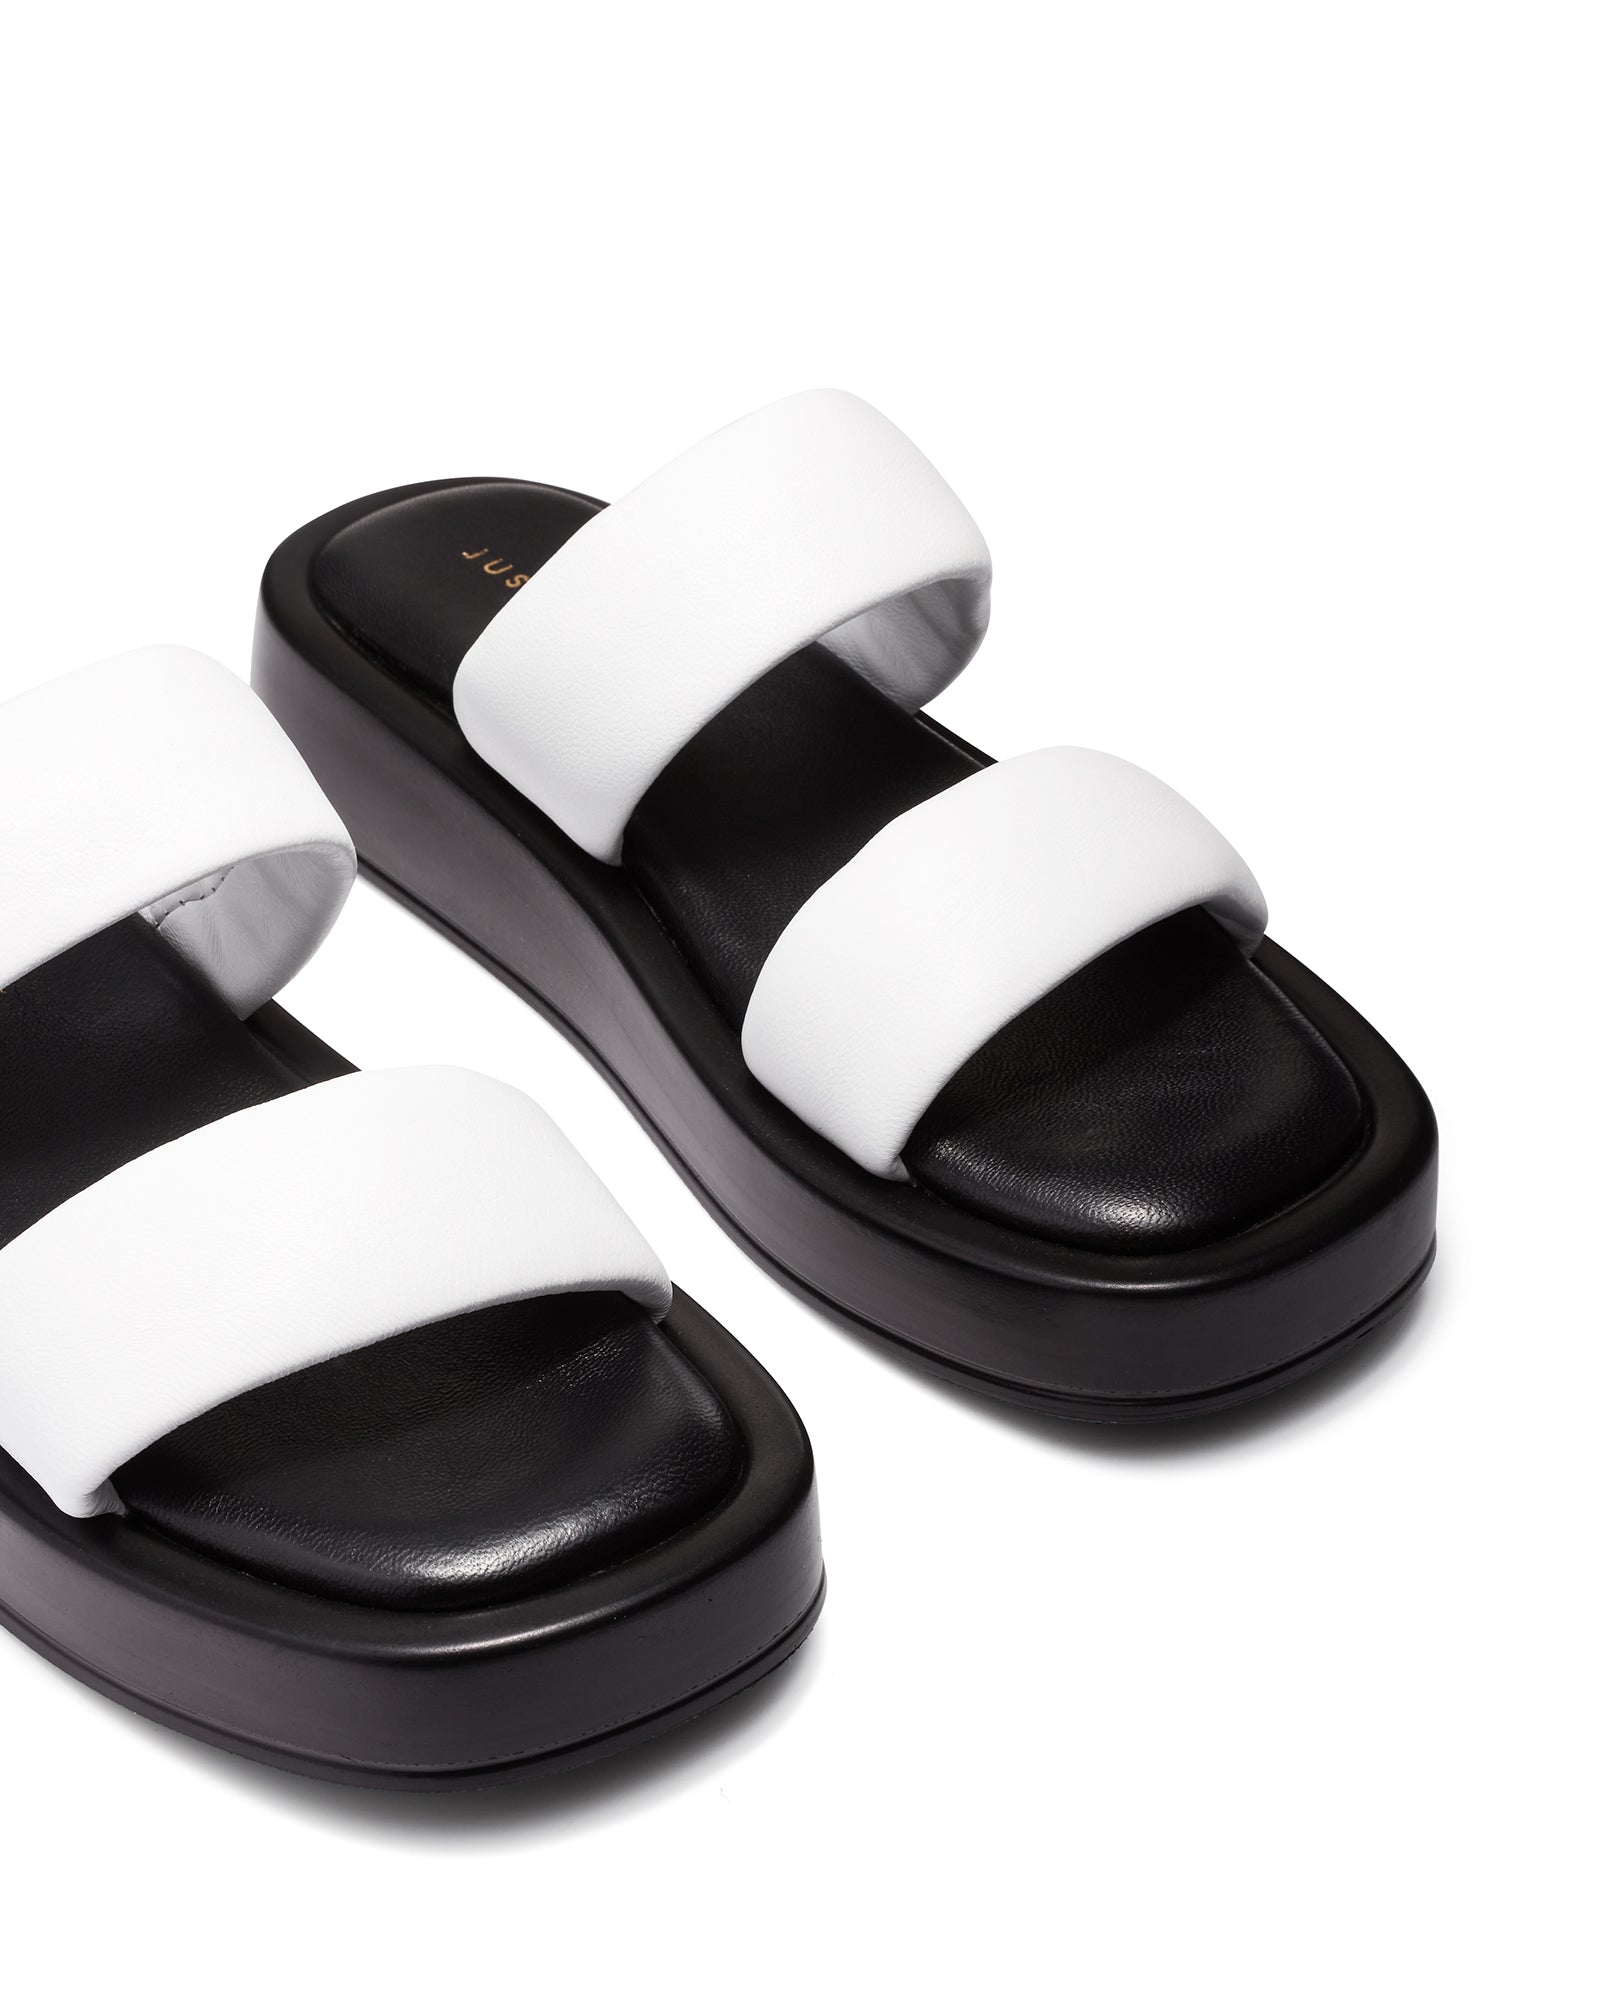 Just Because Shoes Sarita White | Leather Flatform | Slides | Sandals